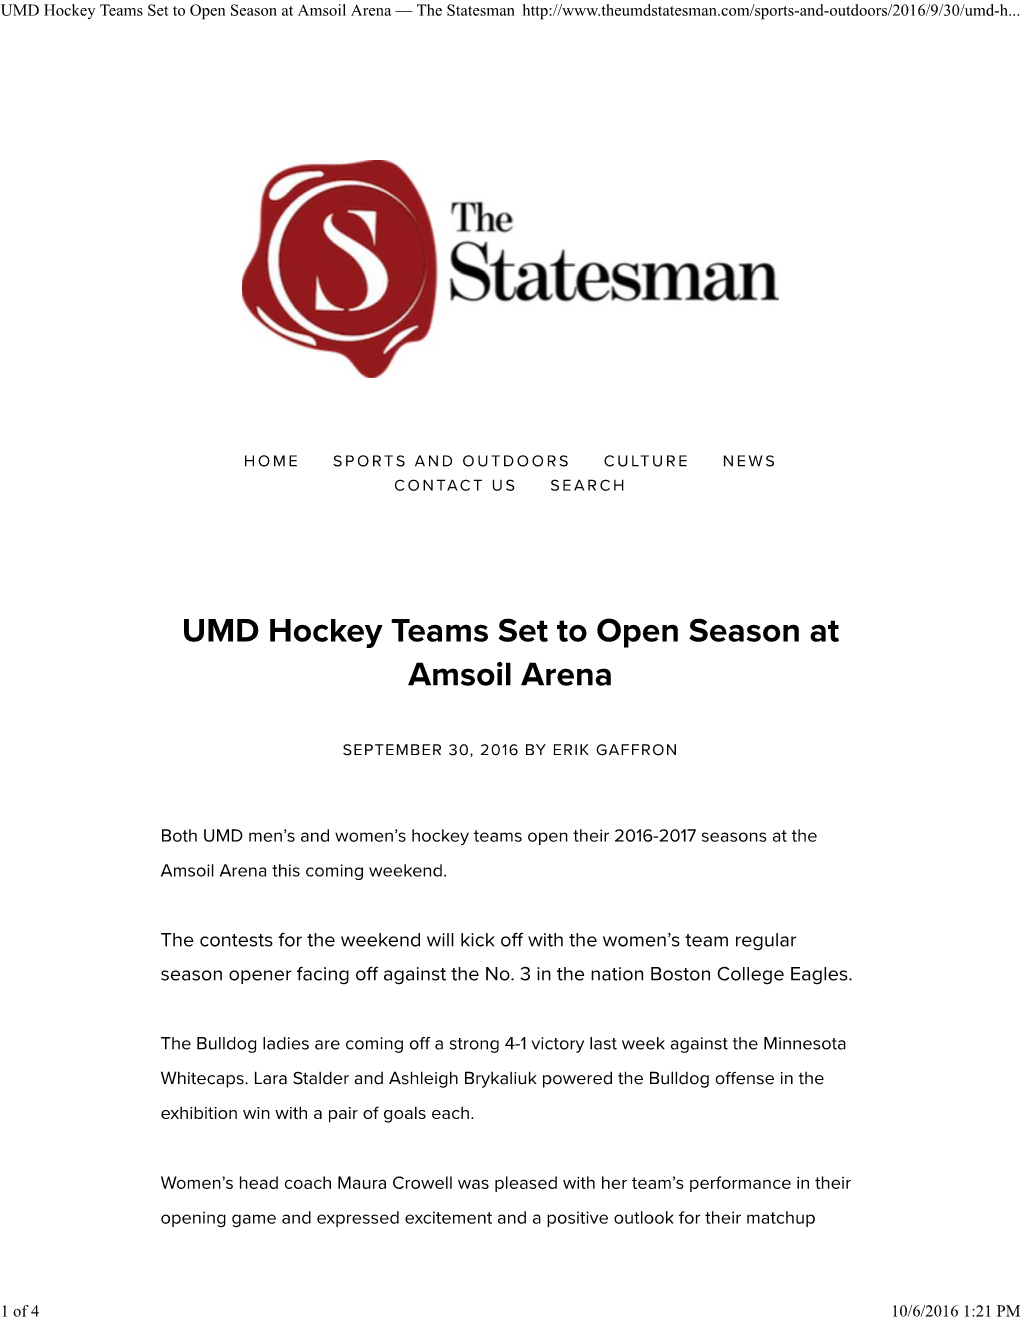 UMD Hockey Teams Set to Open Season at Amsoil Arena (2016-09-30)